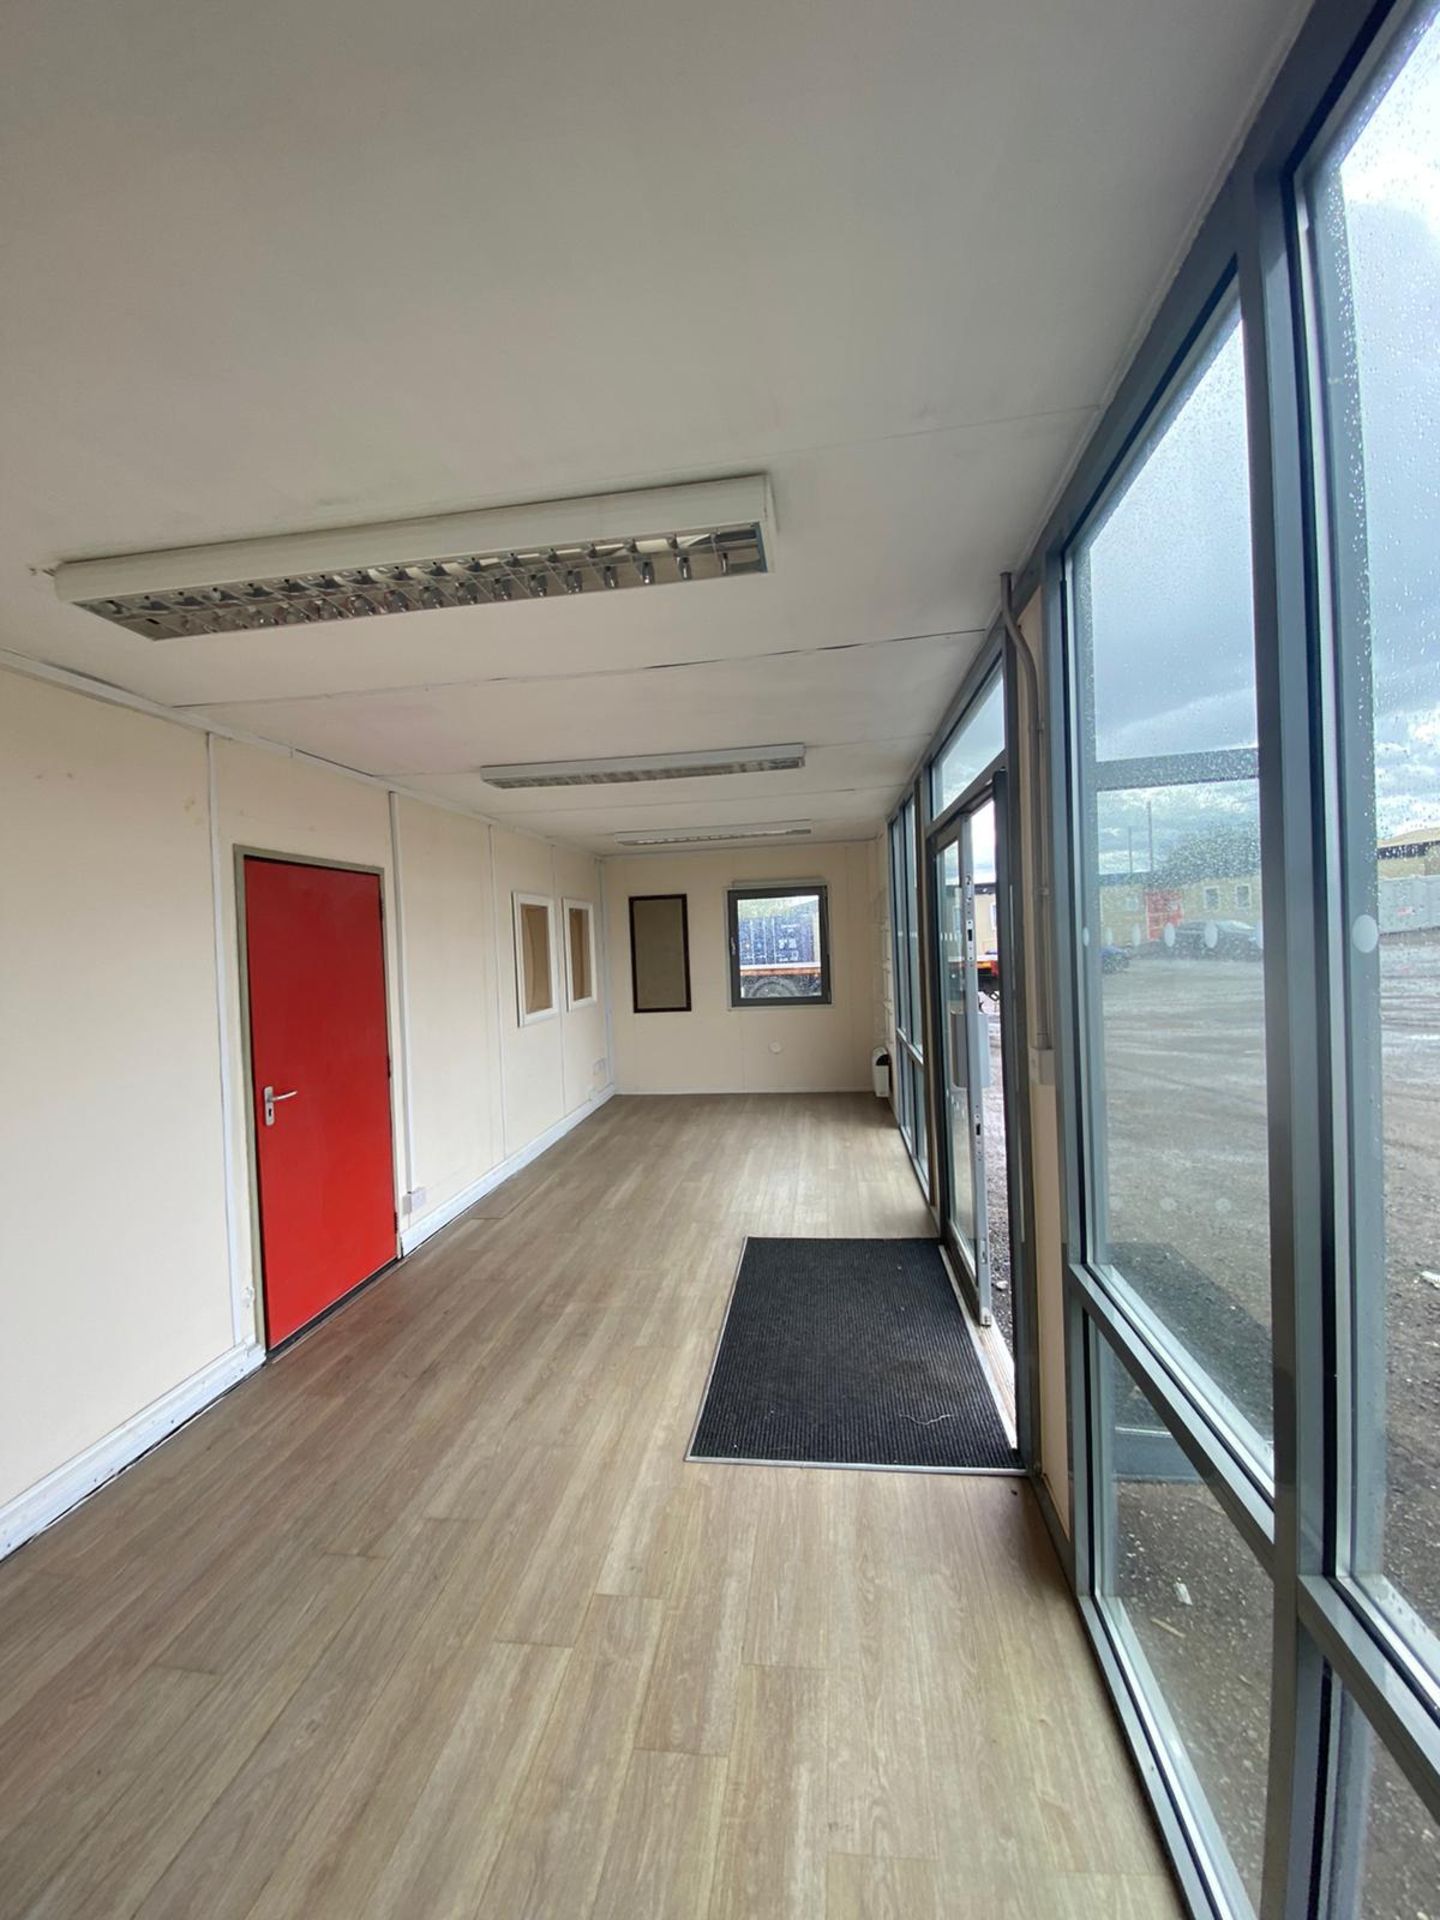 32ft marketing suite, sales centre - Image 5 of 13